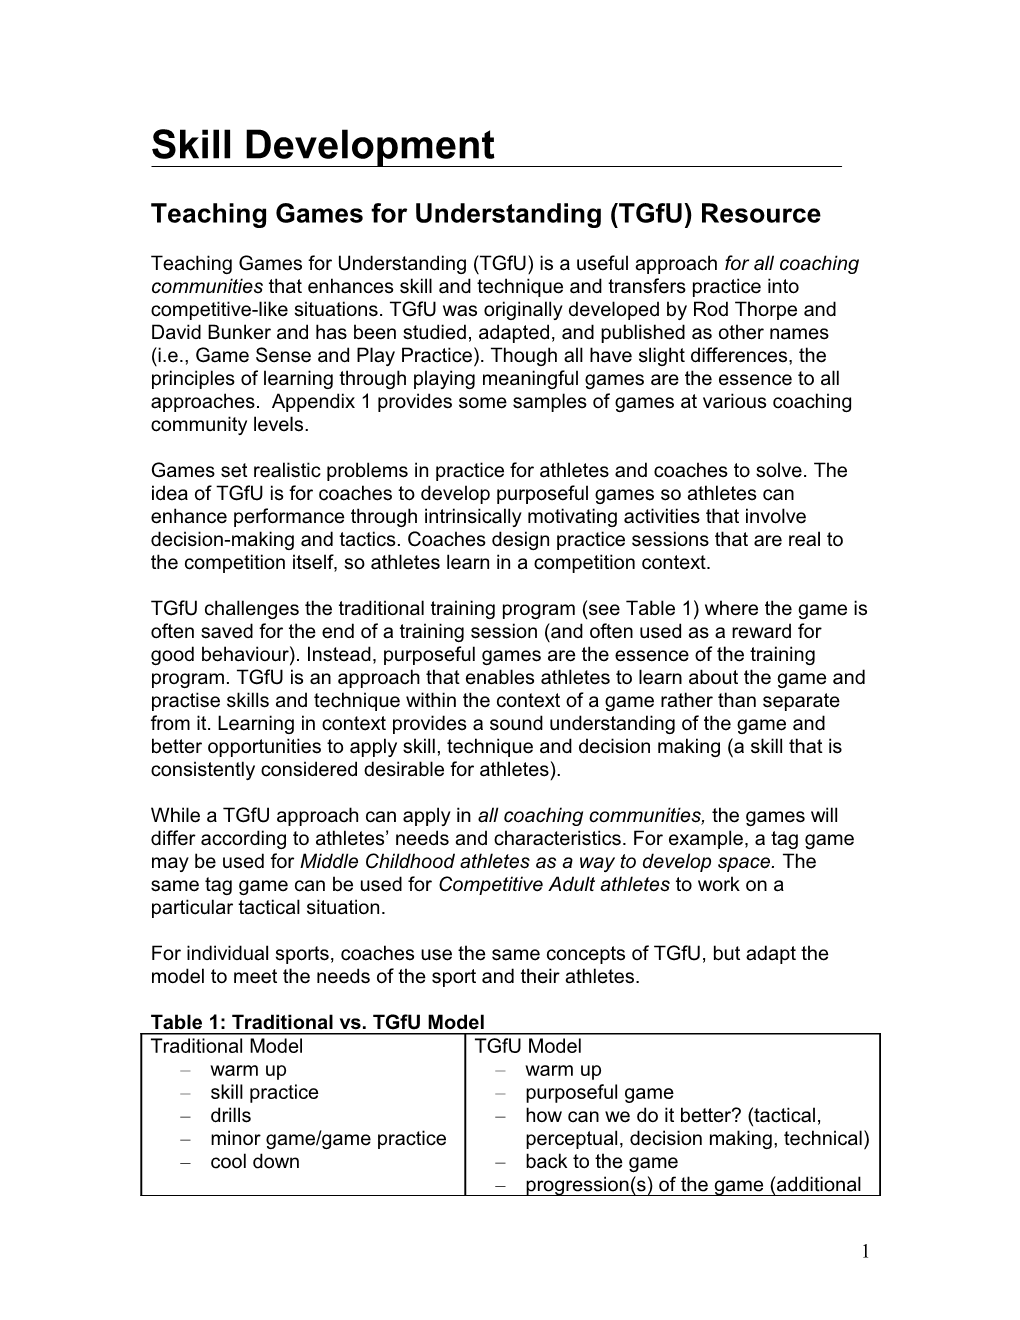 Teaching Games for Understanding (Tgfu)Resource